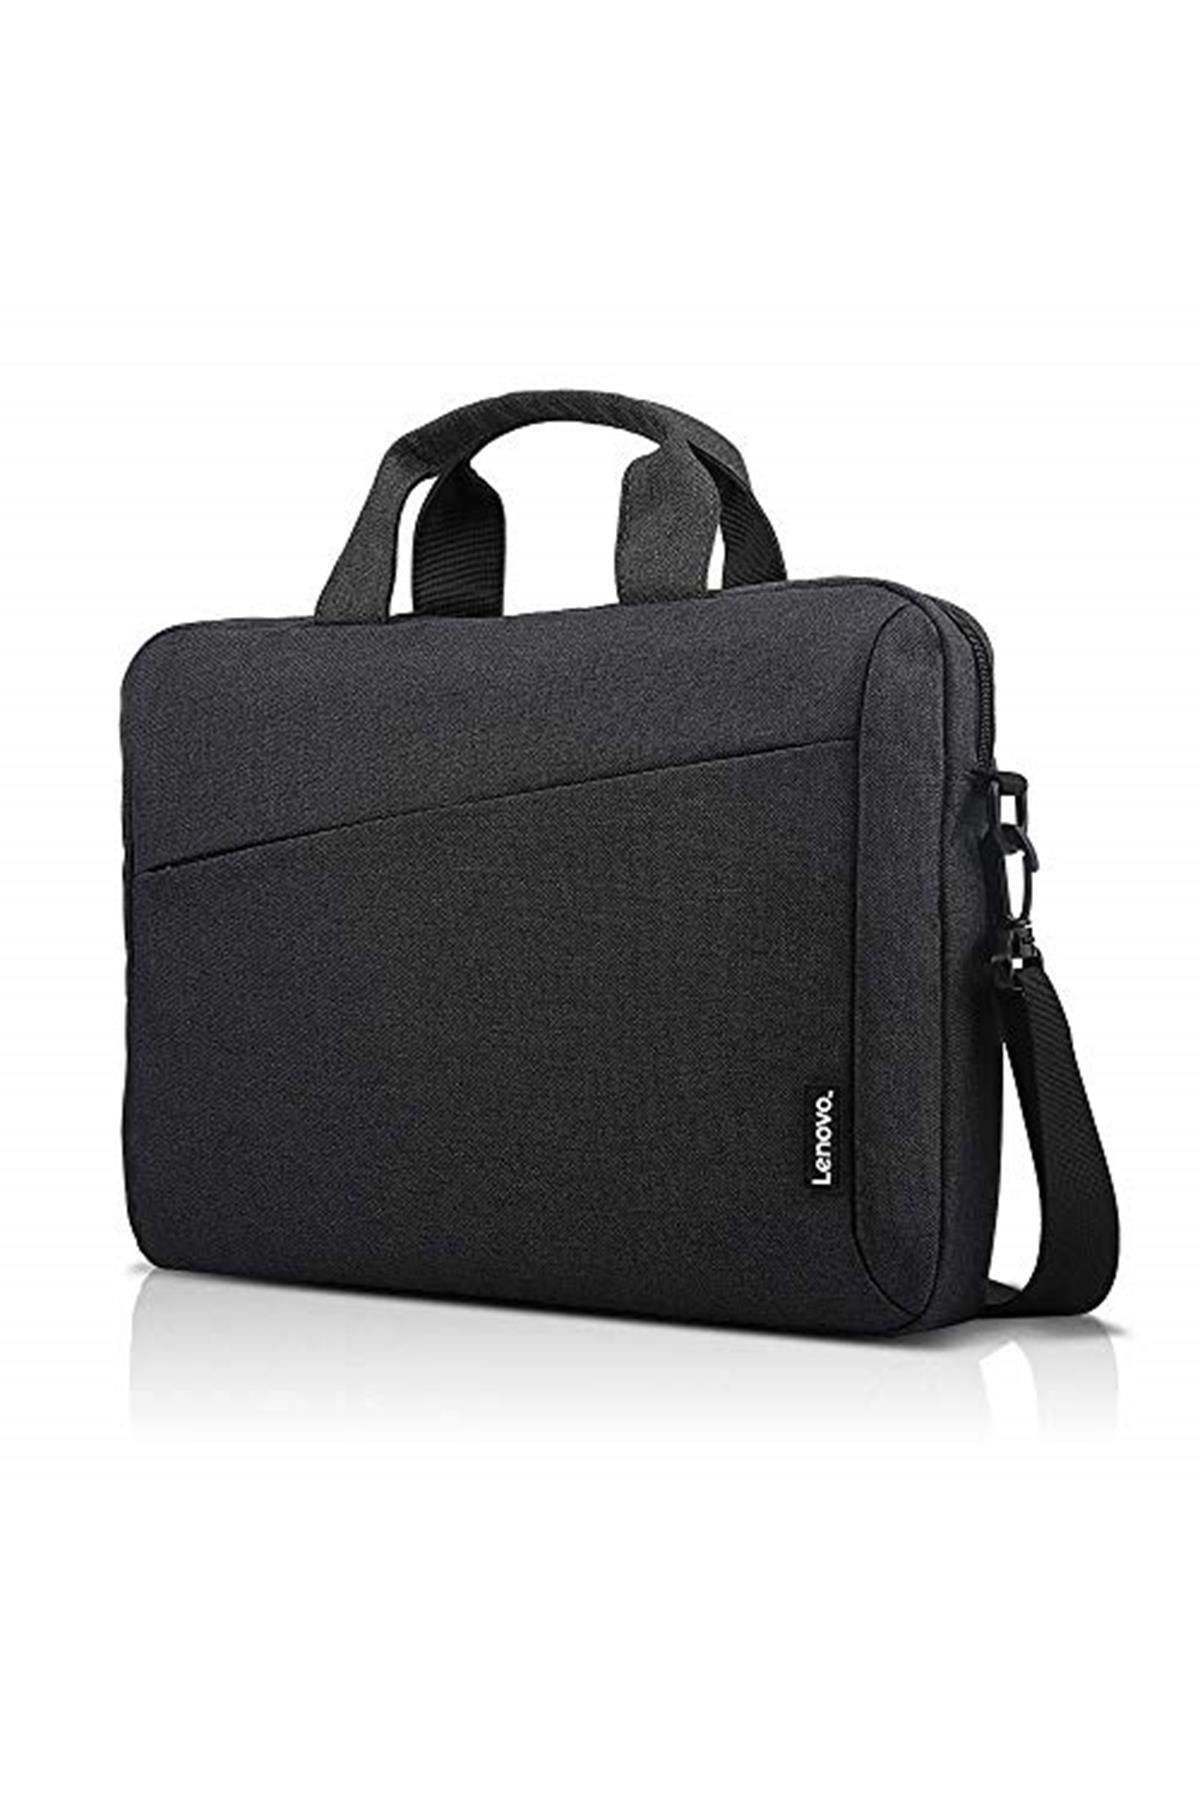 LENOVO [çanta] 15,6 Inç Casual Topload Laptop Çantası T210 (su Geçirmez), Chromebook (wwcb), Siyah,